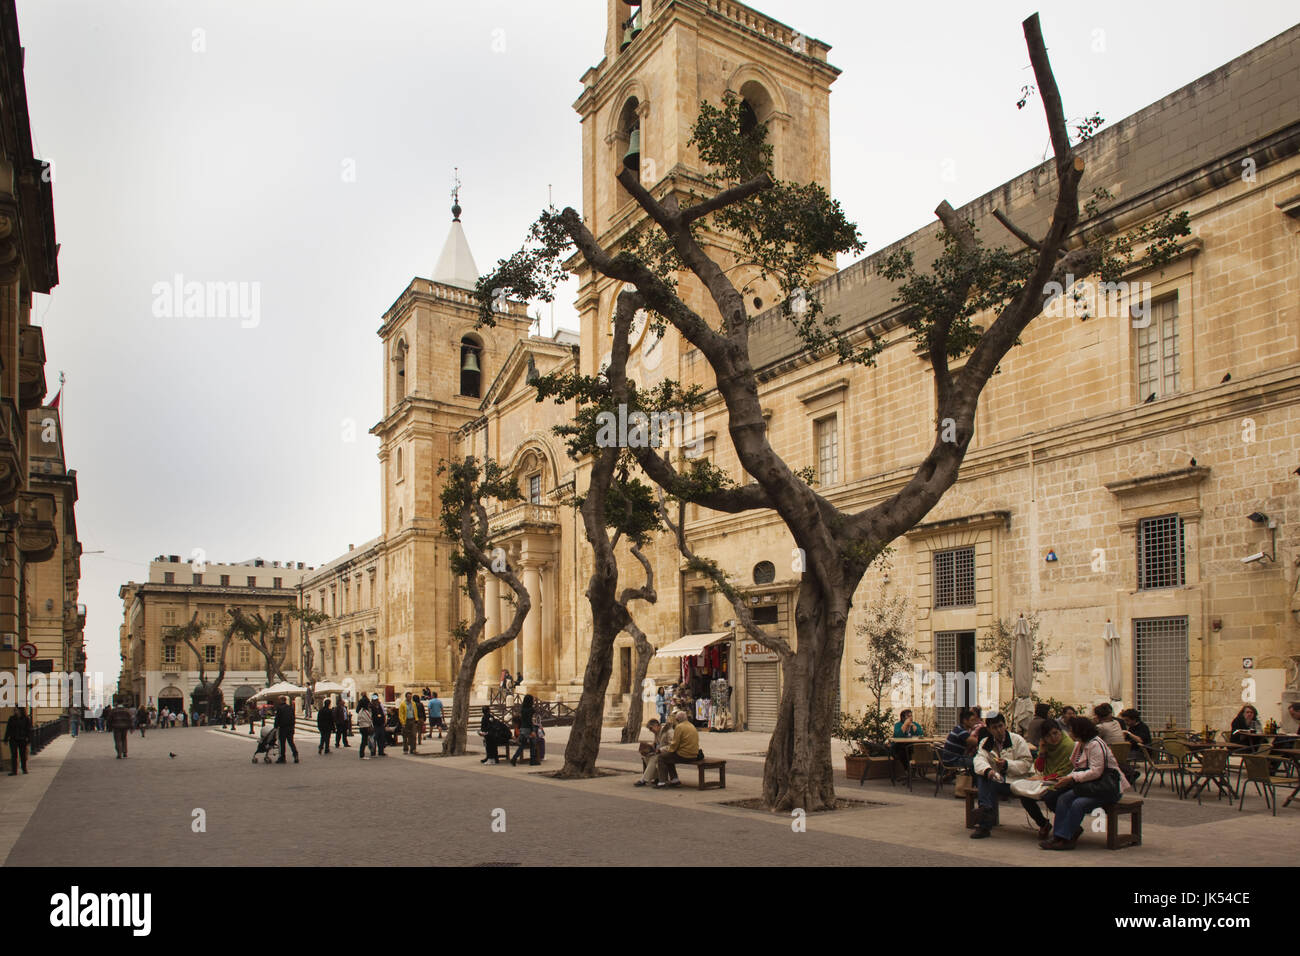 Malta, Valletta, St. John's Co-Cathedral, exterior Stock Photo